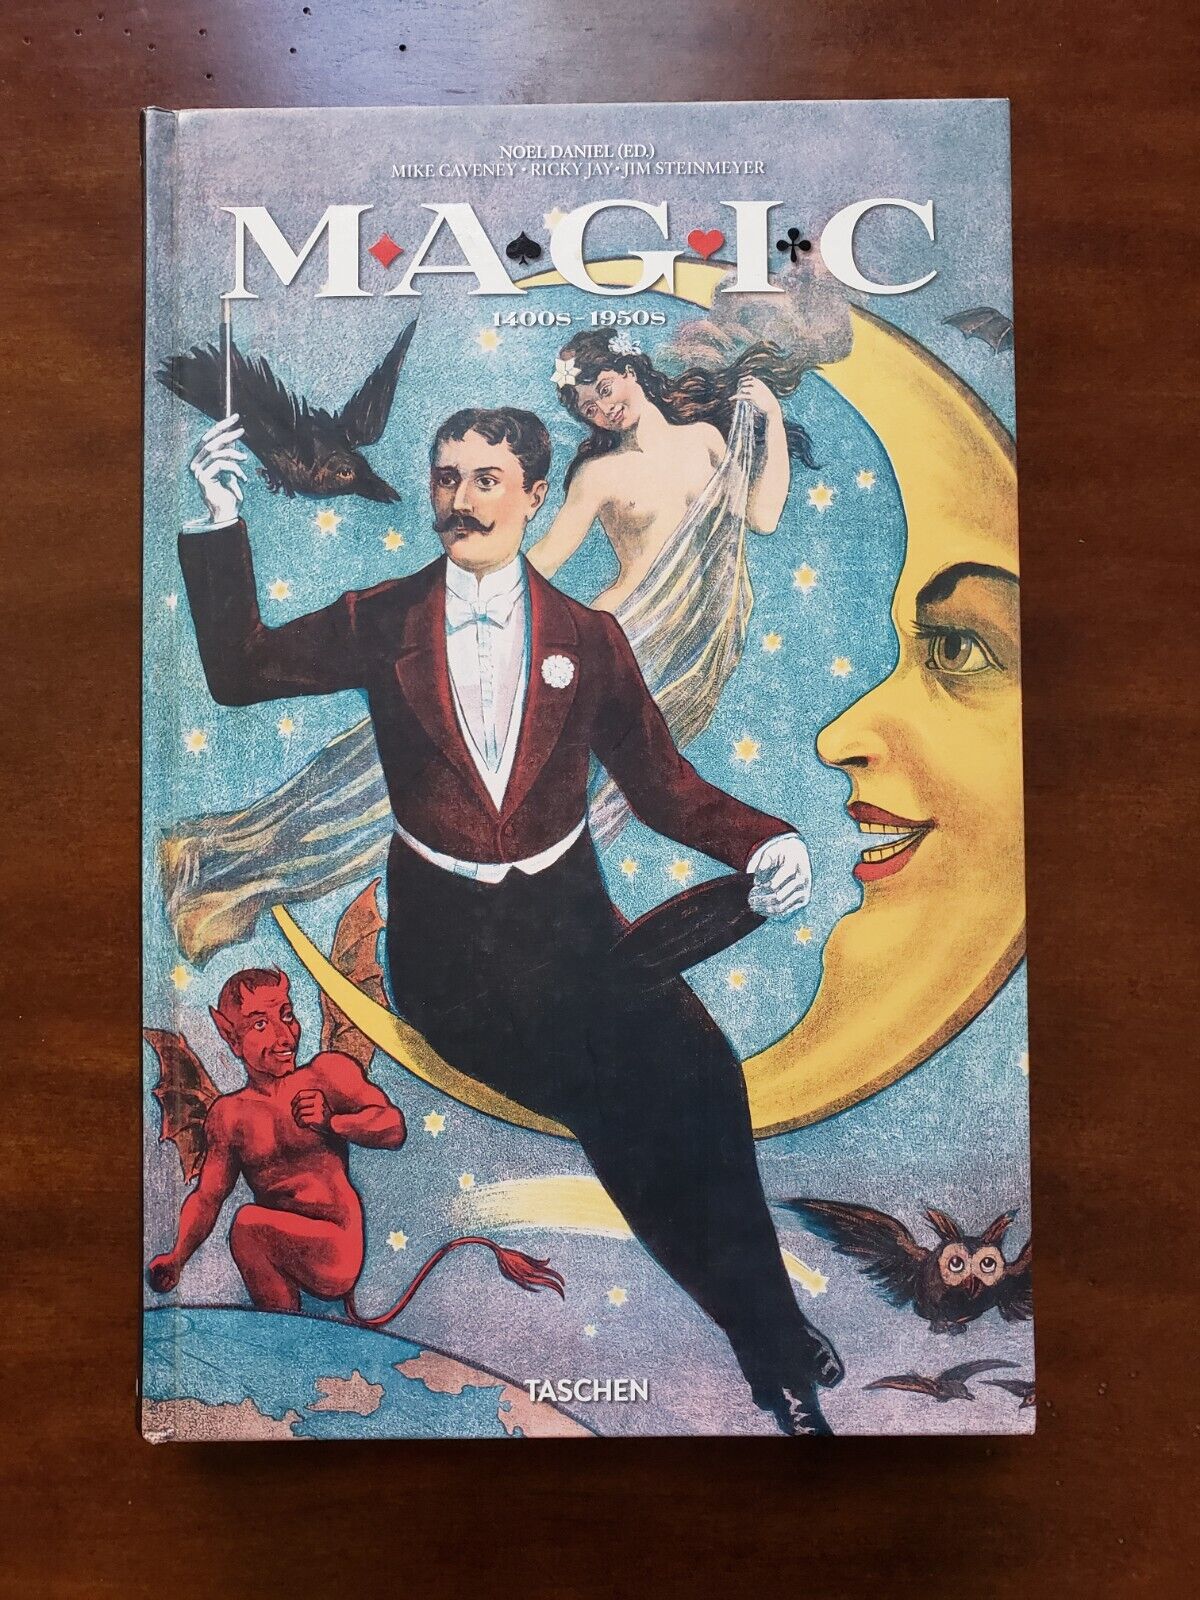 Magic 1400s-1950s by N. Daniel, M. Caveney, R. Jay & J. Steinmeyer